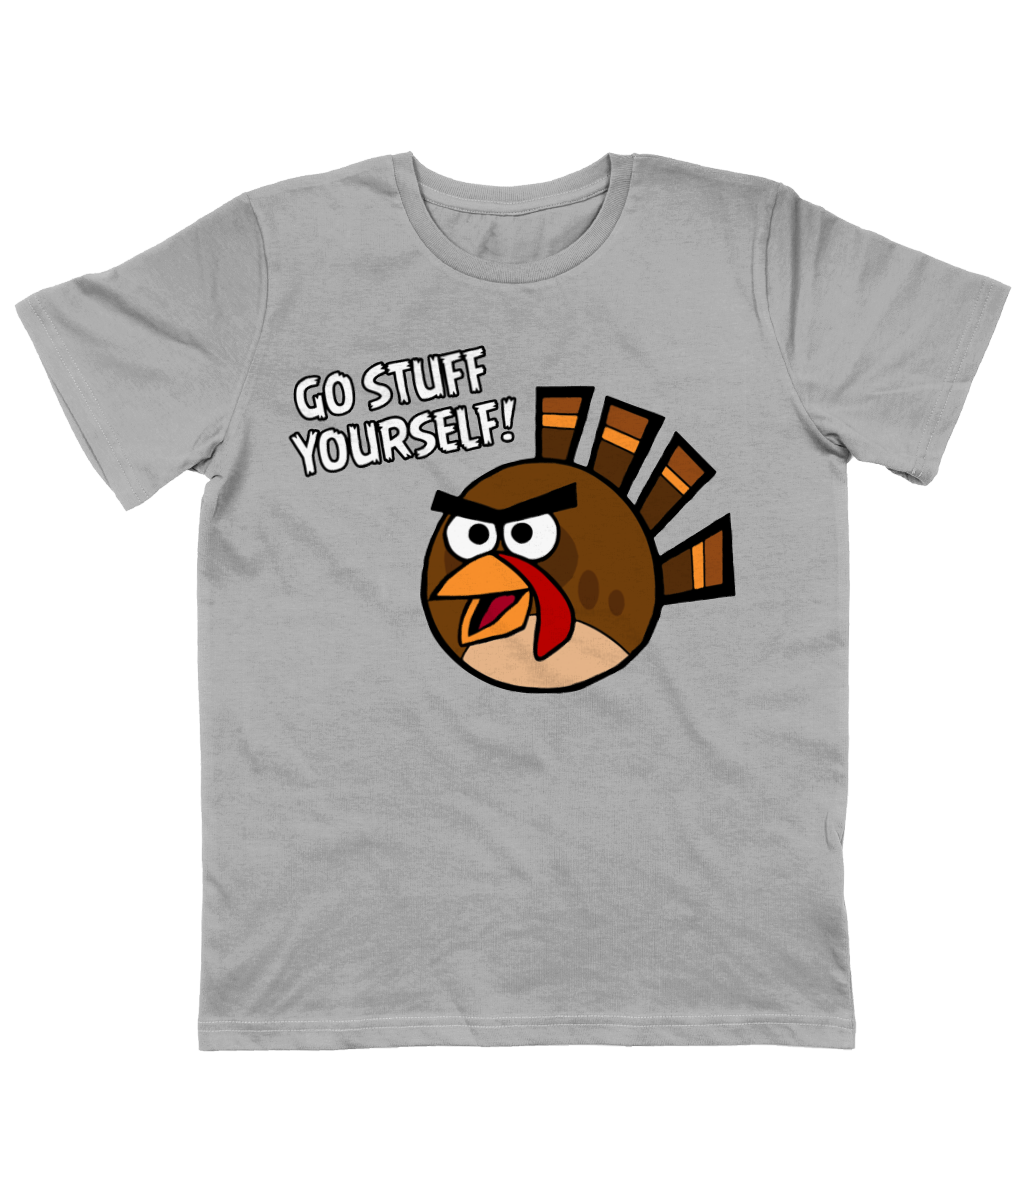 GO STUFF YOURSELF! - ANGRY BIRD TURKEY - Kids